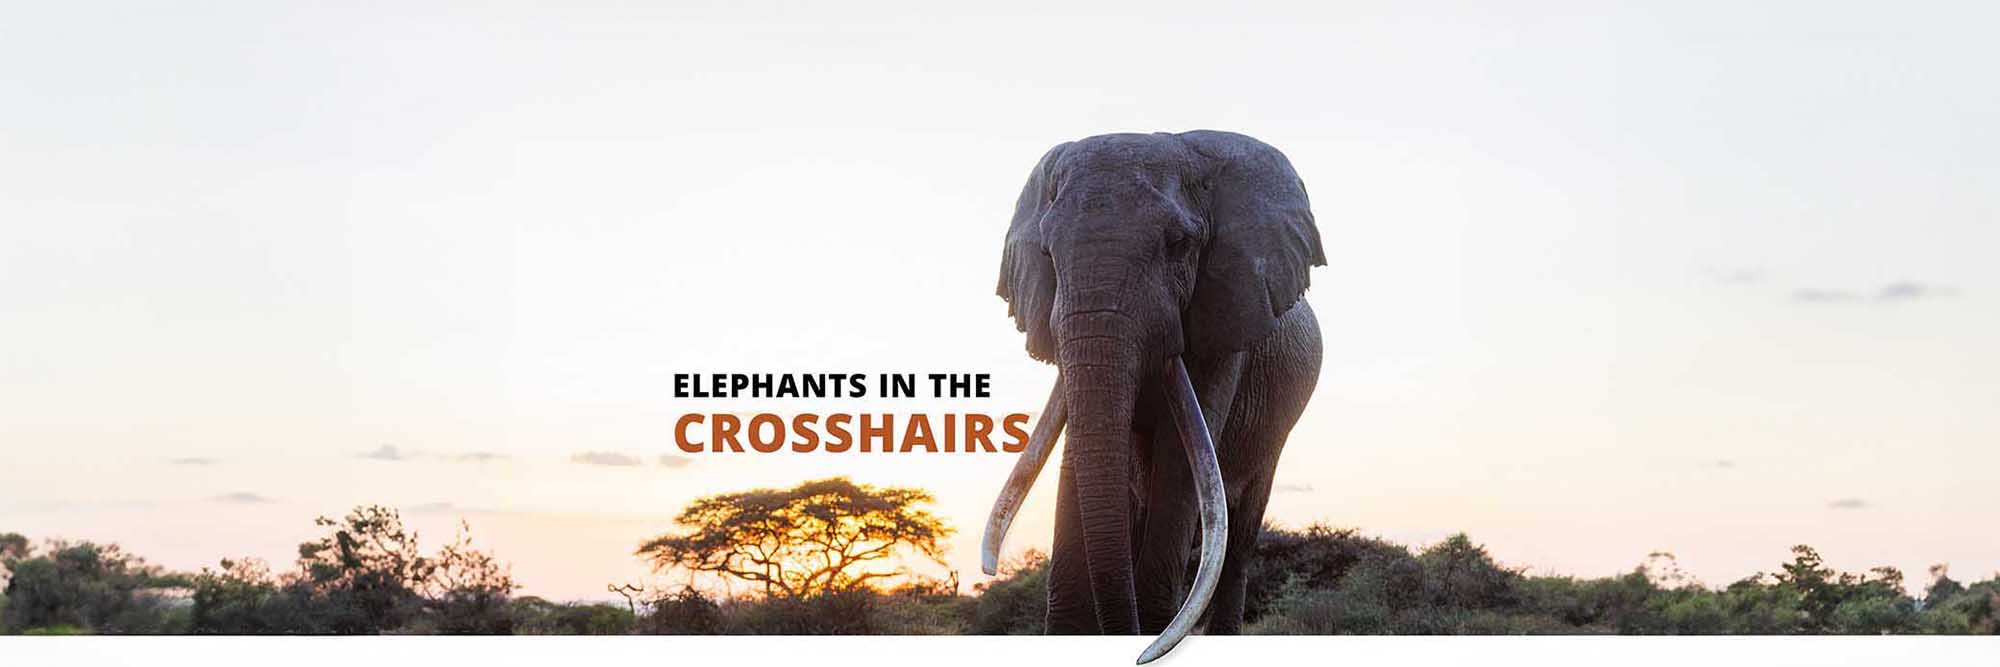 Elephants in the Crosshairs